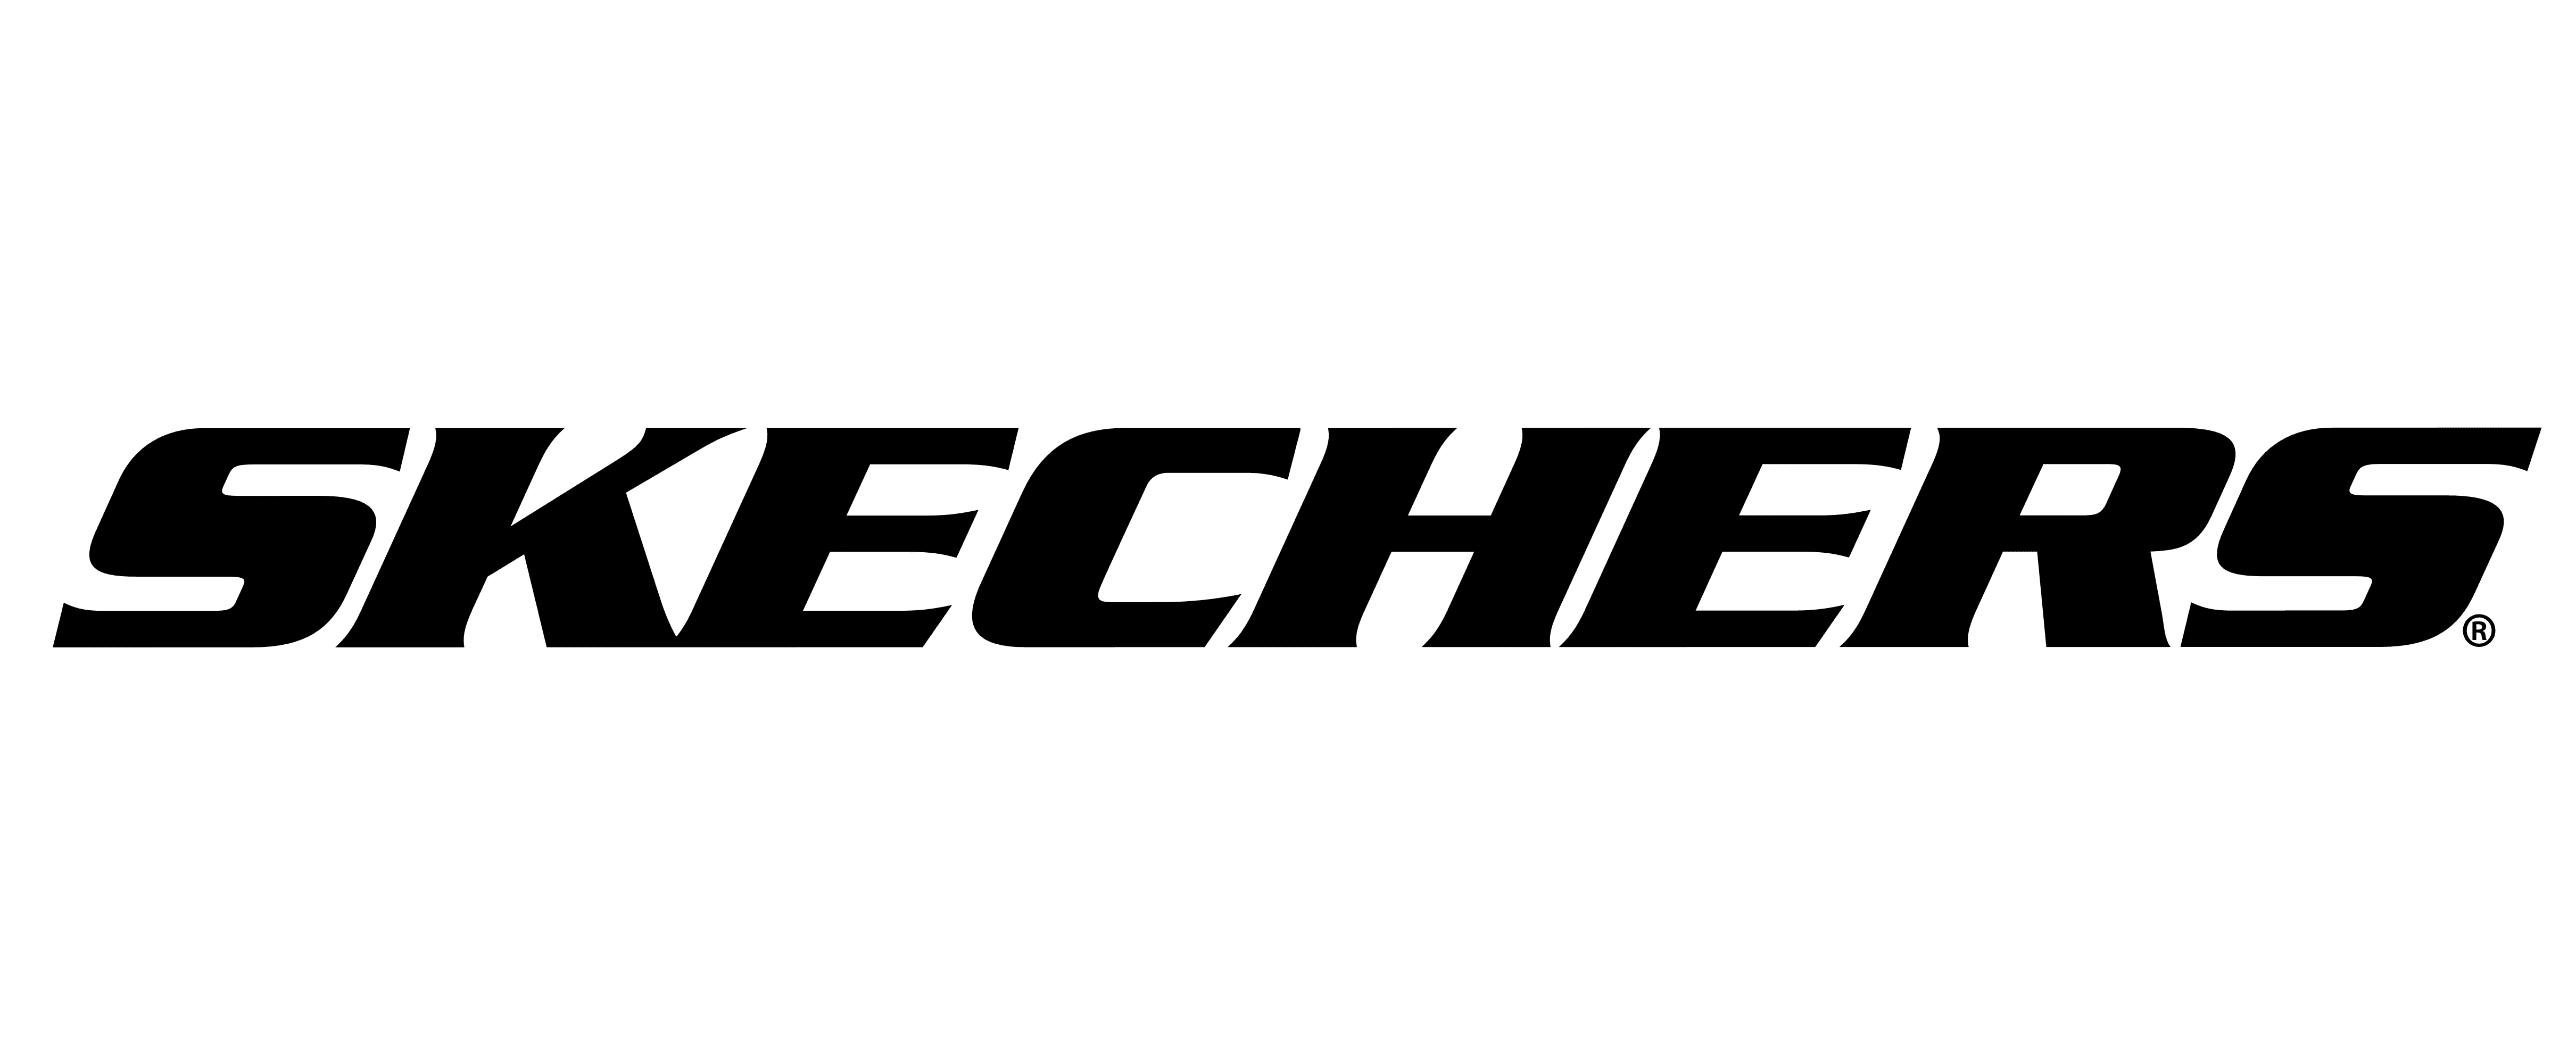 skechers-logo-black